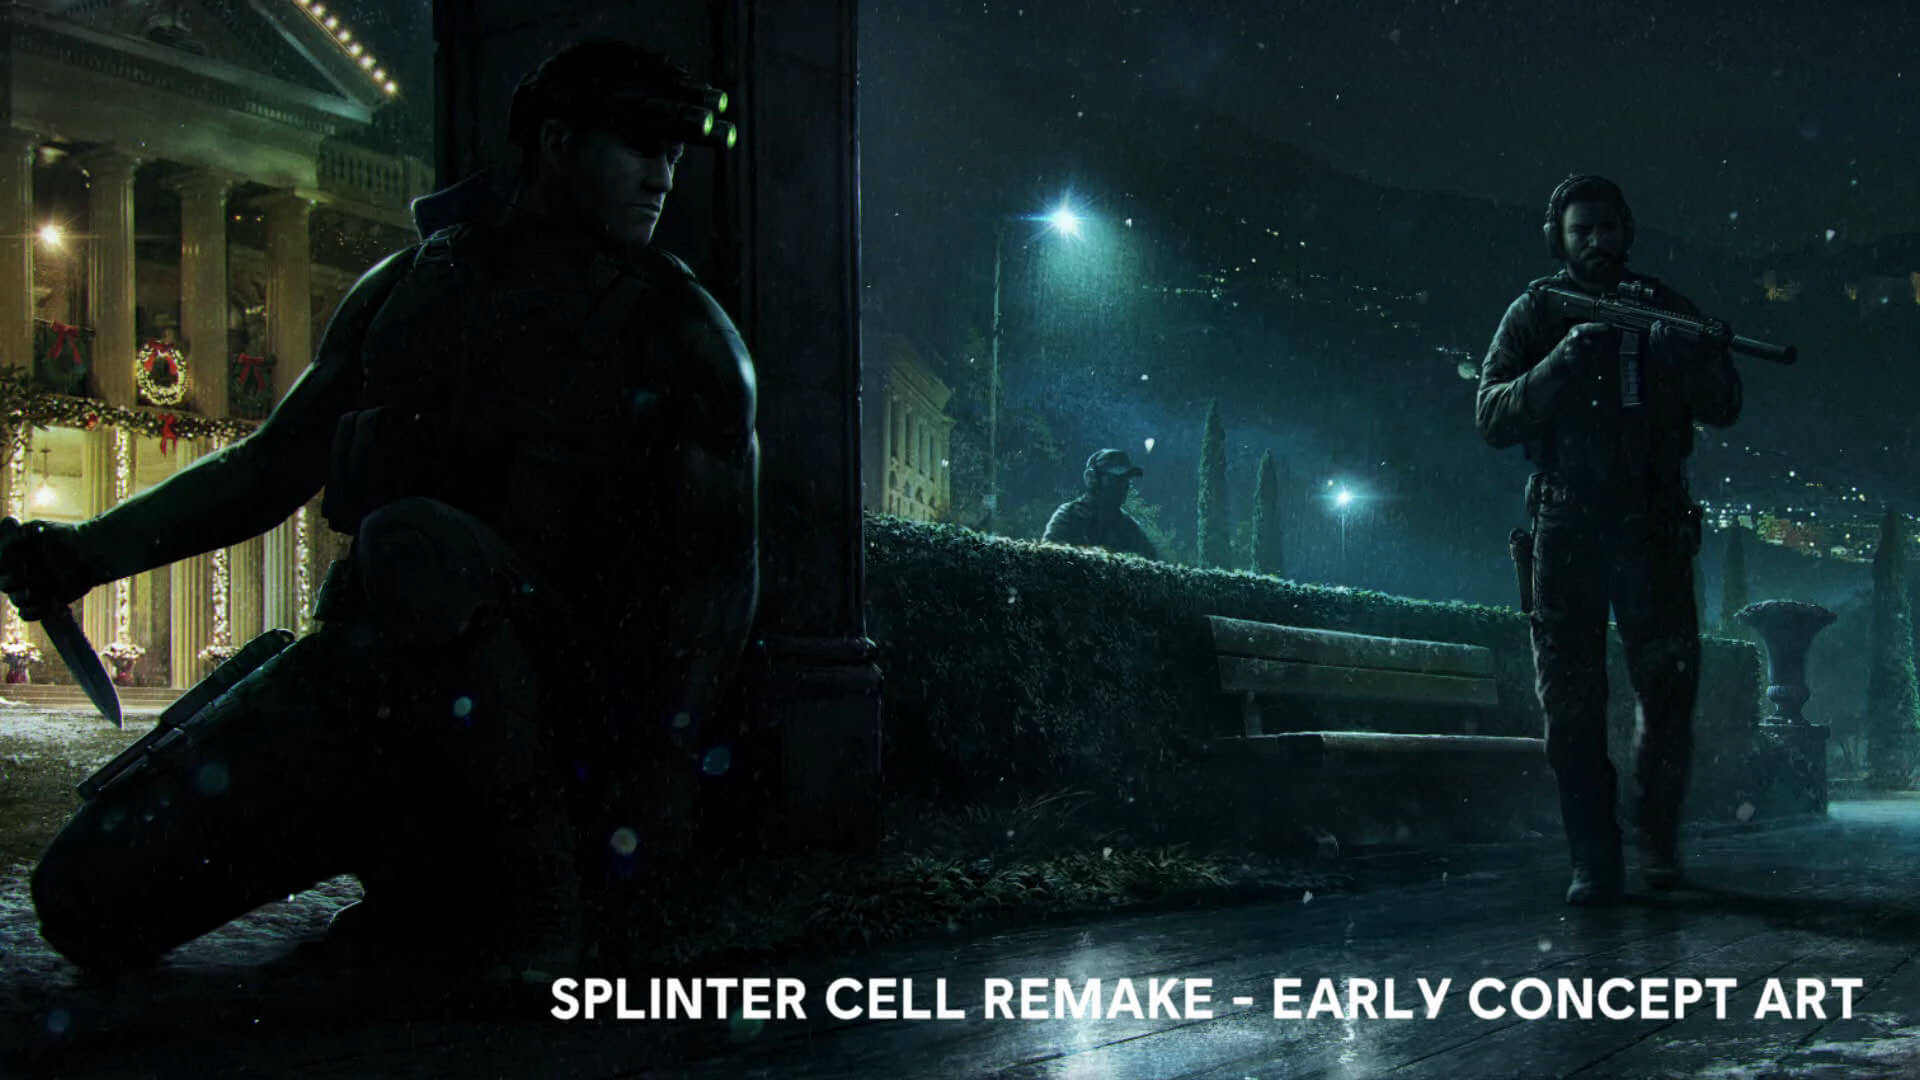 Splinter-Cell-Remake-concept-art.jpg